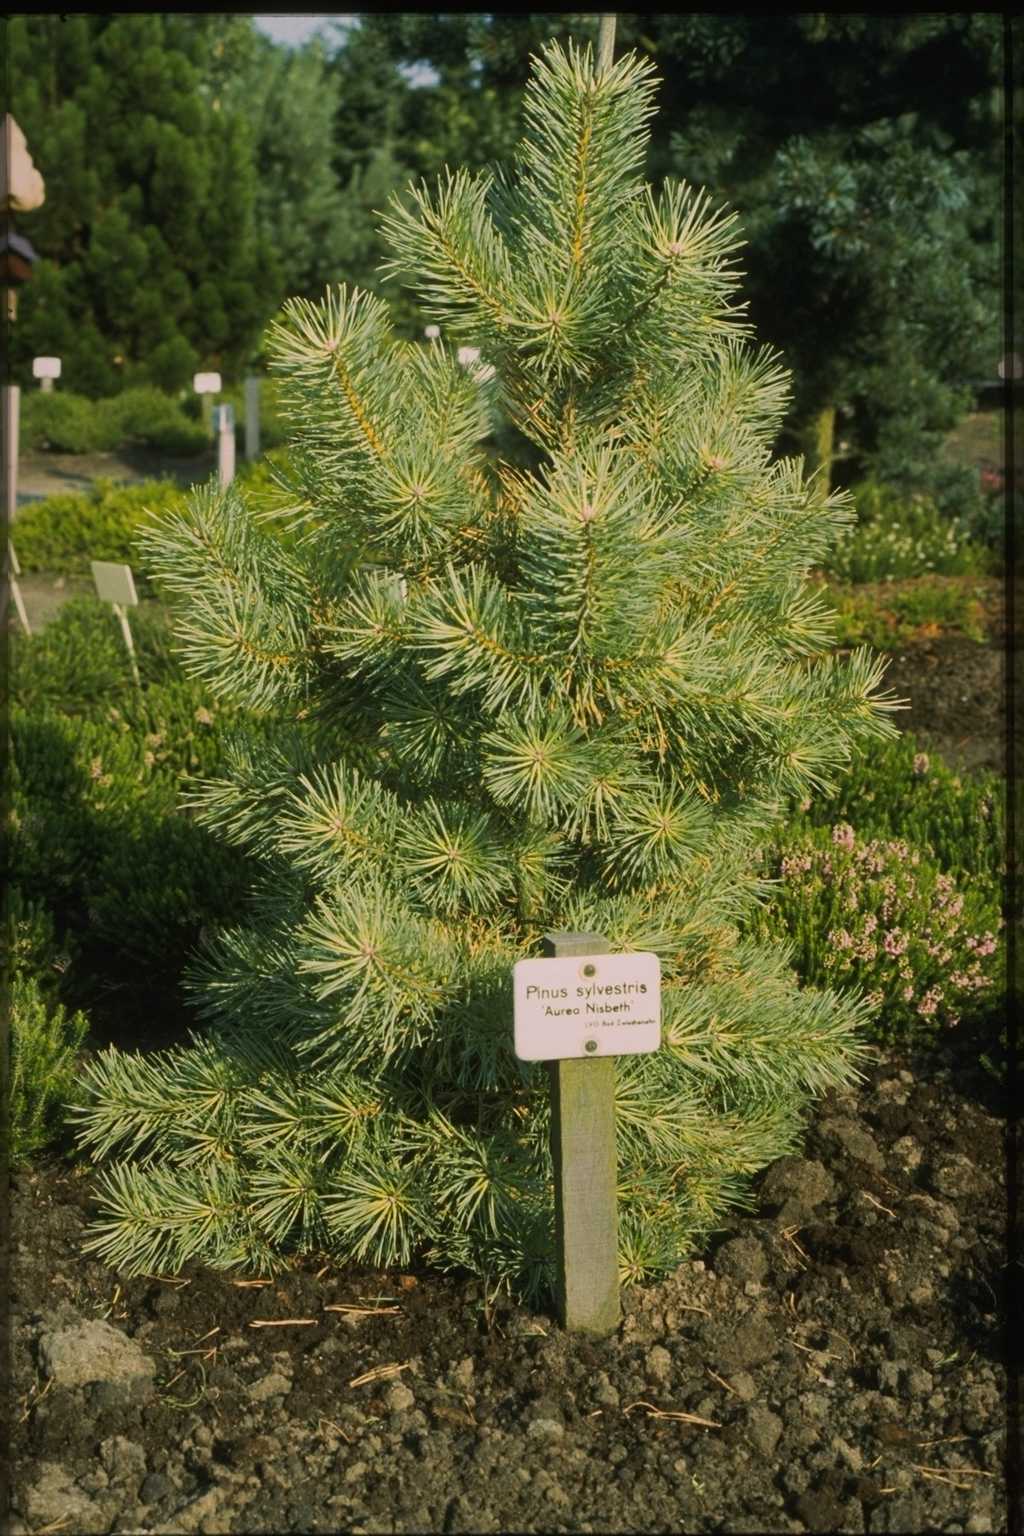 Pinus sylvestris ‘Aurea Nisbeth’